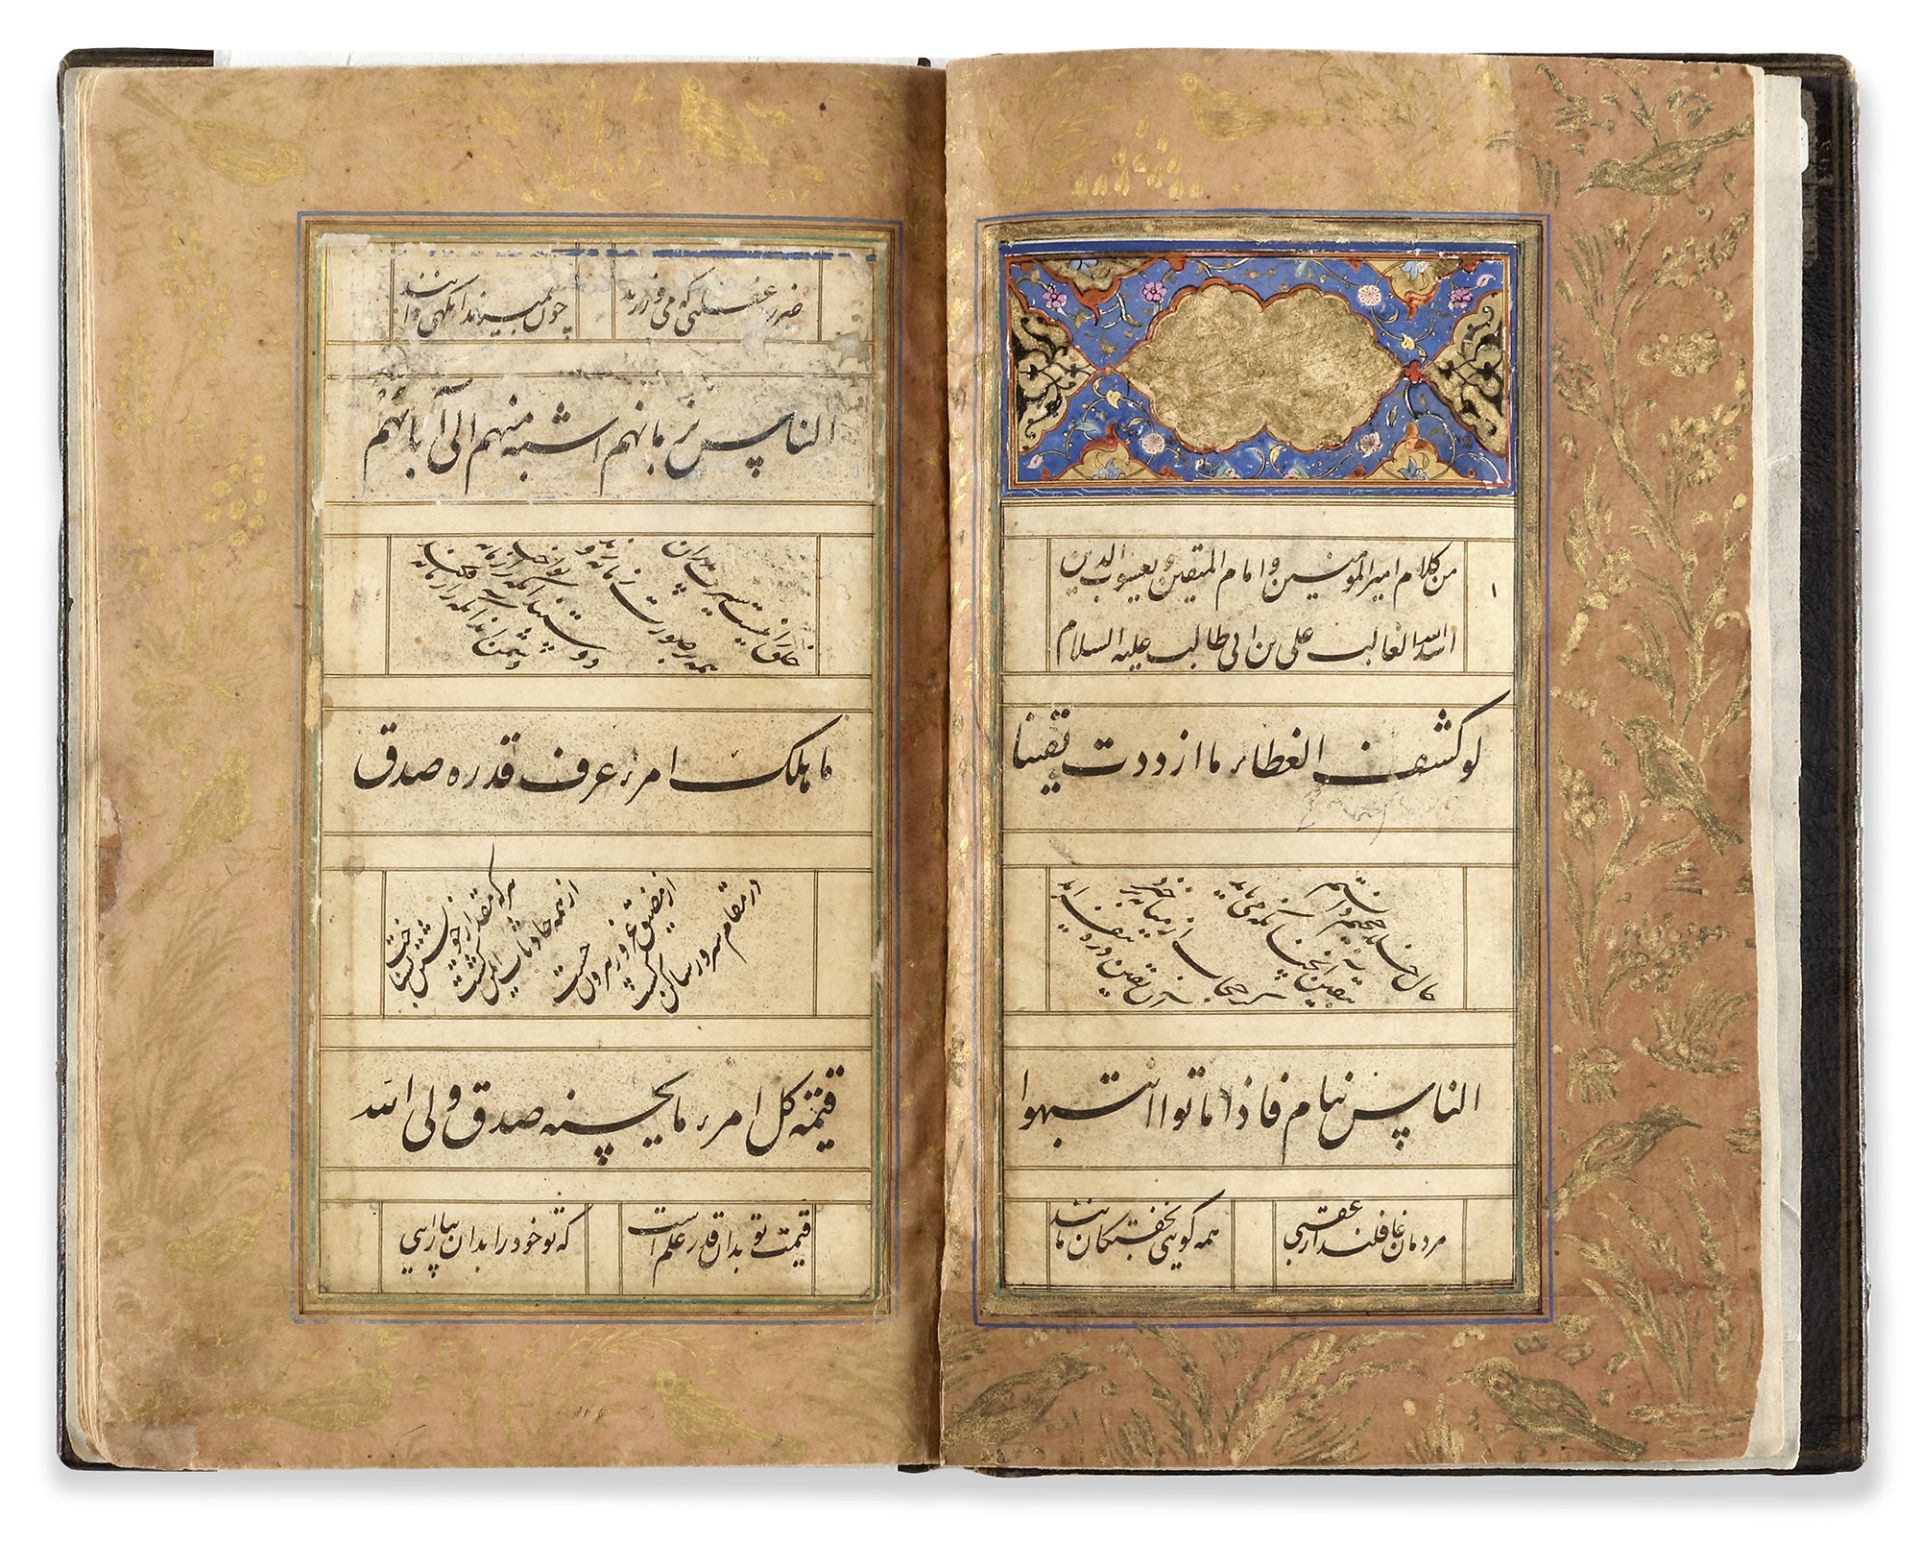 MUNAJAT OF IMAM 'ALI BIN ABI TALIB, PERSIA SAFAVID, DATED 1028 AH/1628 AD